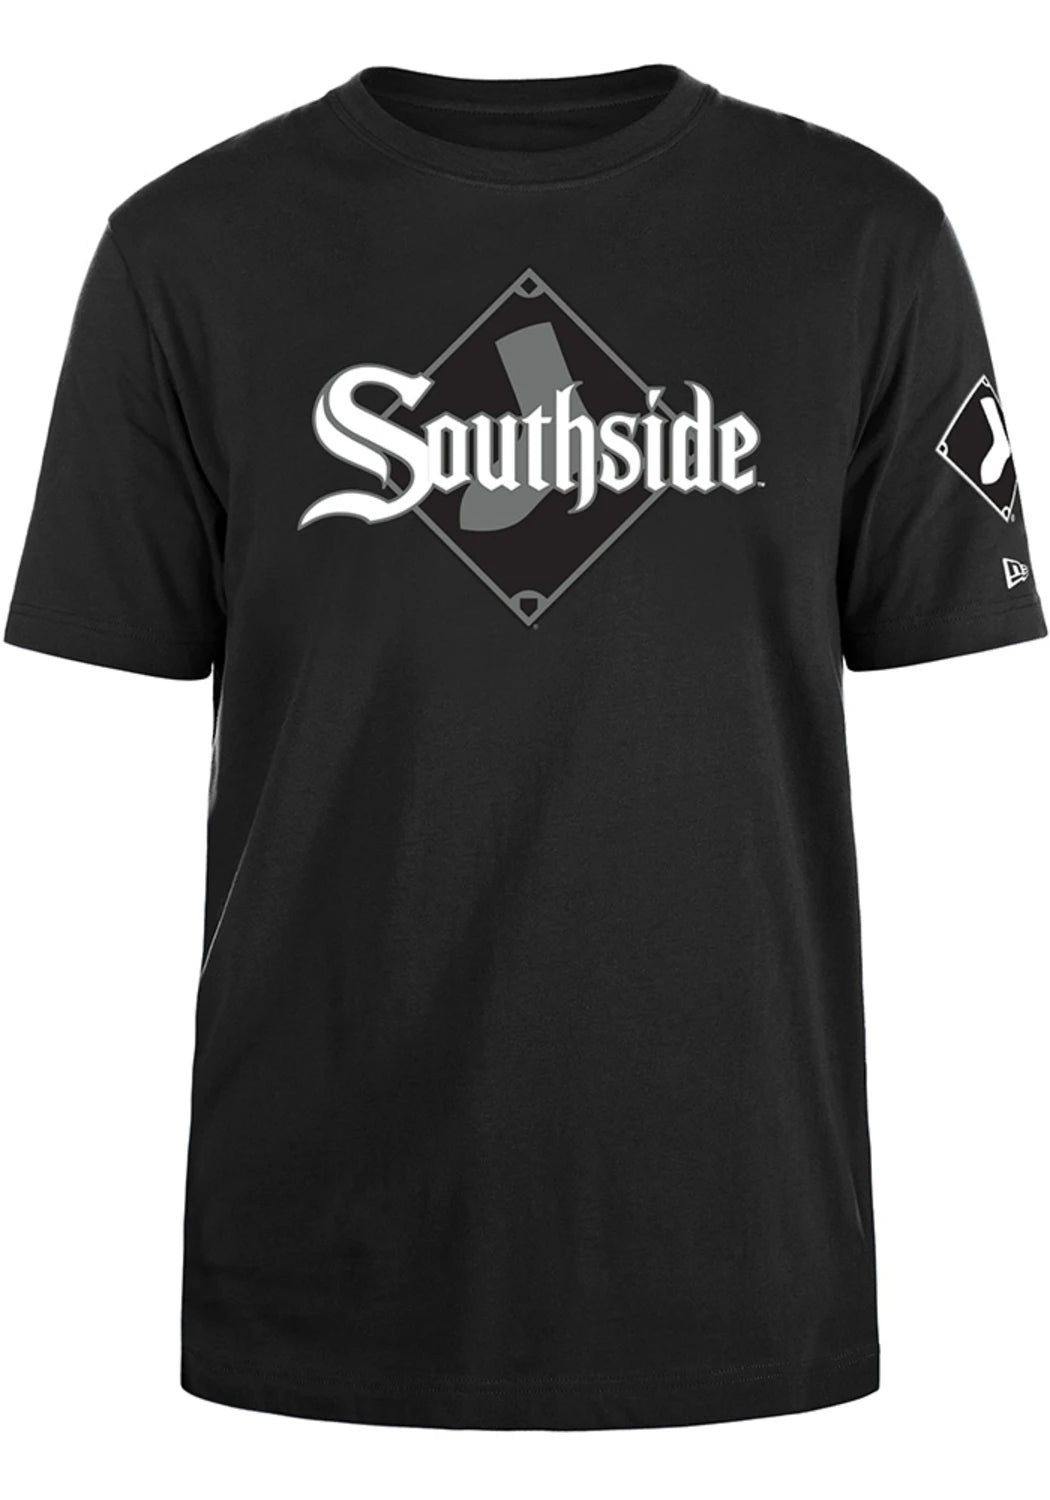 Chicago White Sox New Era Men's Southside City Connect Wordmark T-Shirt